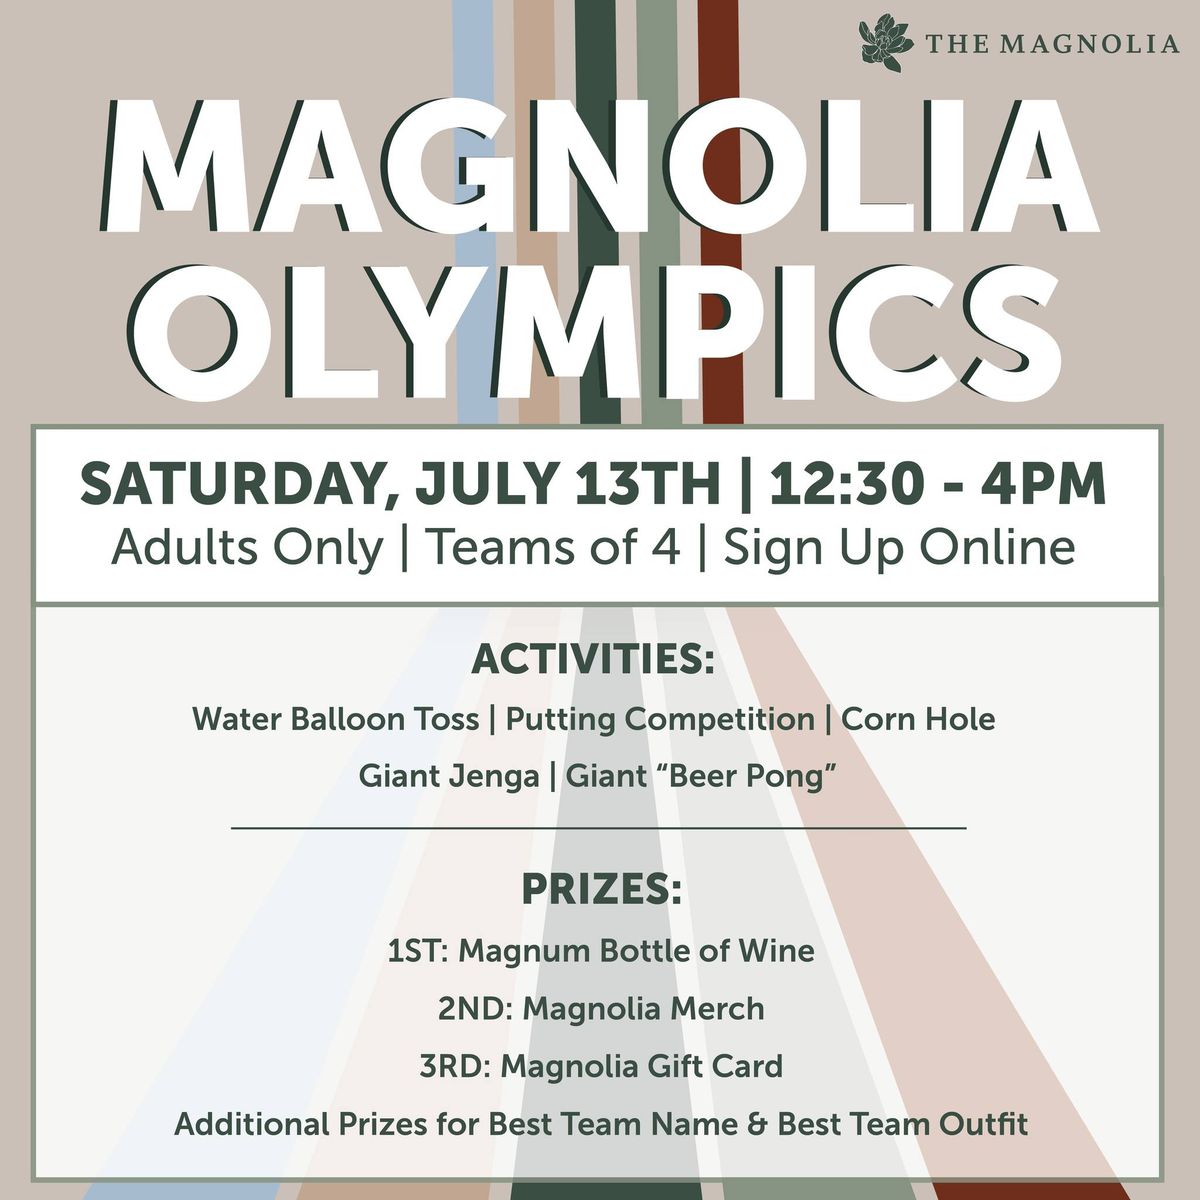 The Magnolia Olympics